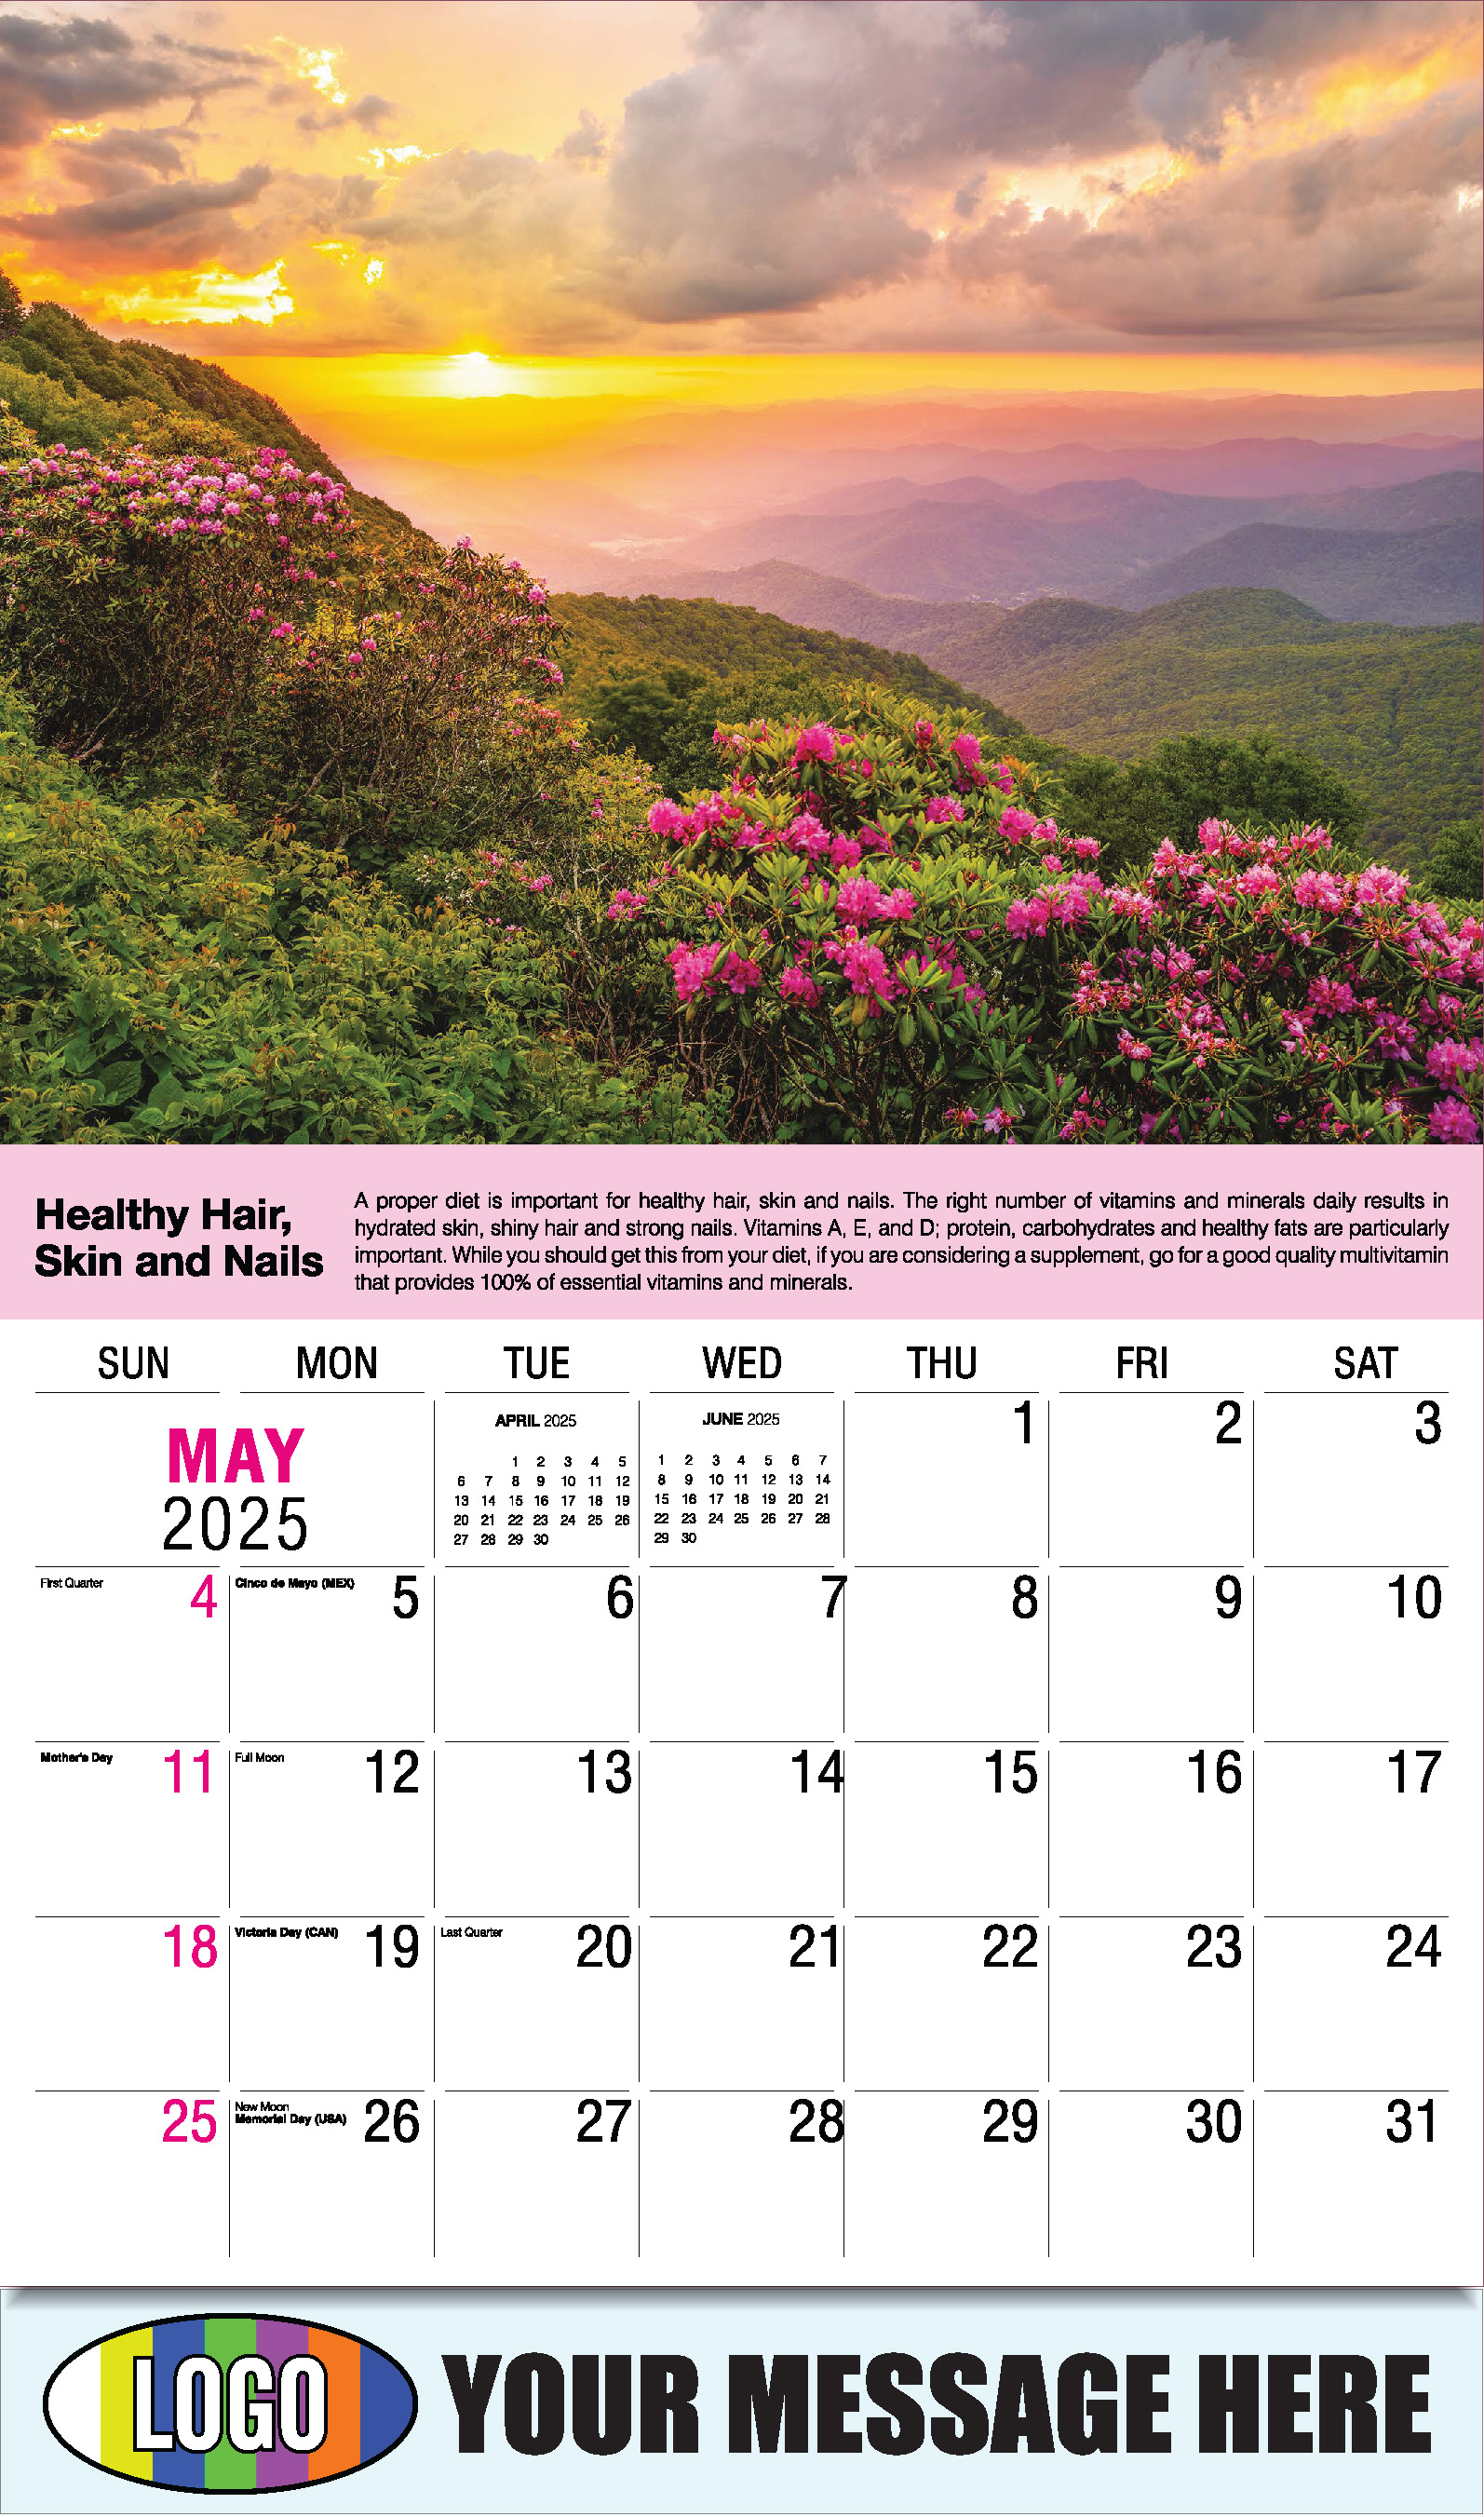 Health Tips 2025 Business Promo Wall Calendar - May